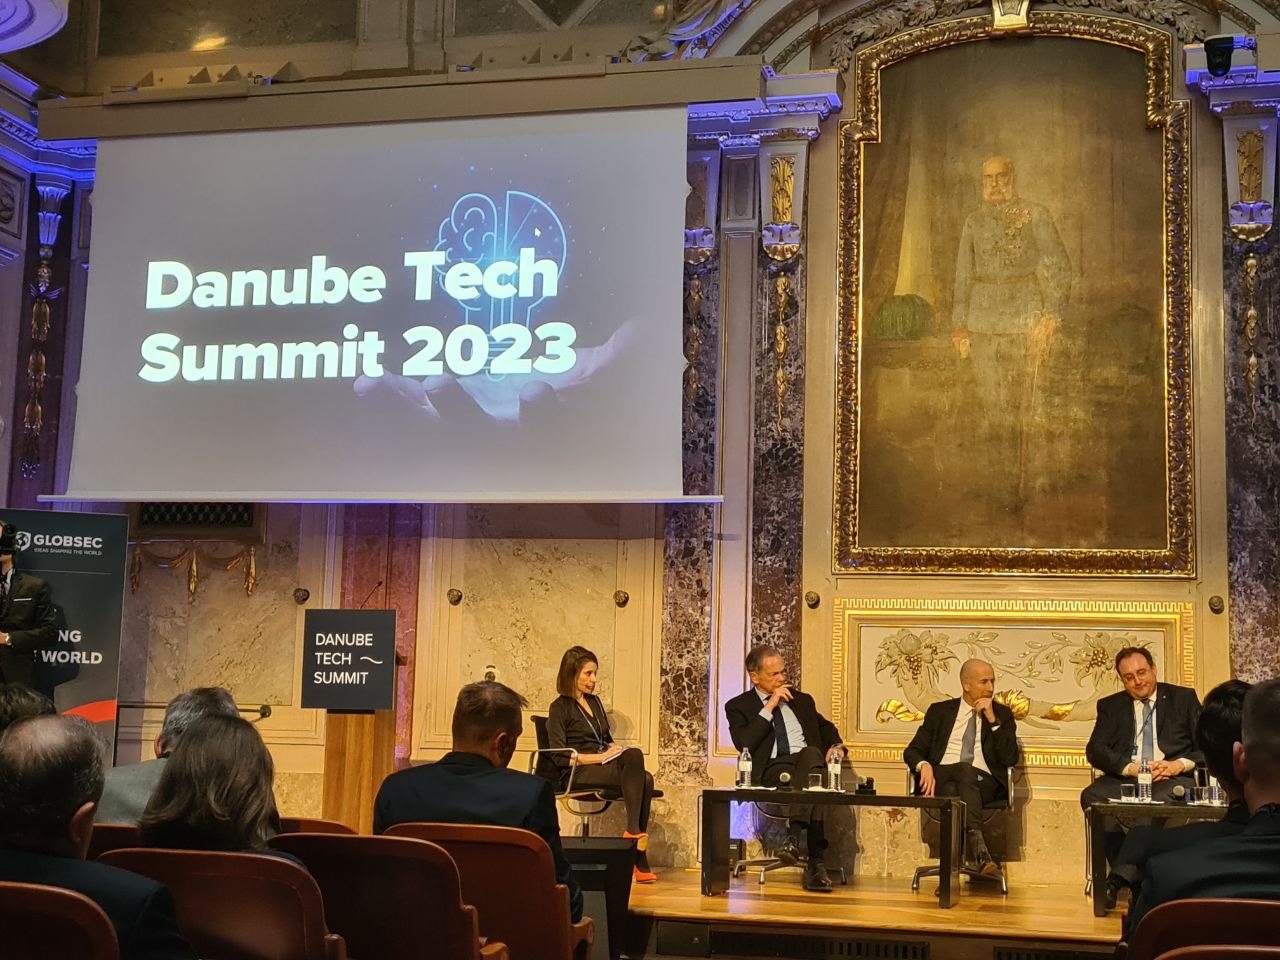 Danube Tech Summit 2023